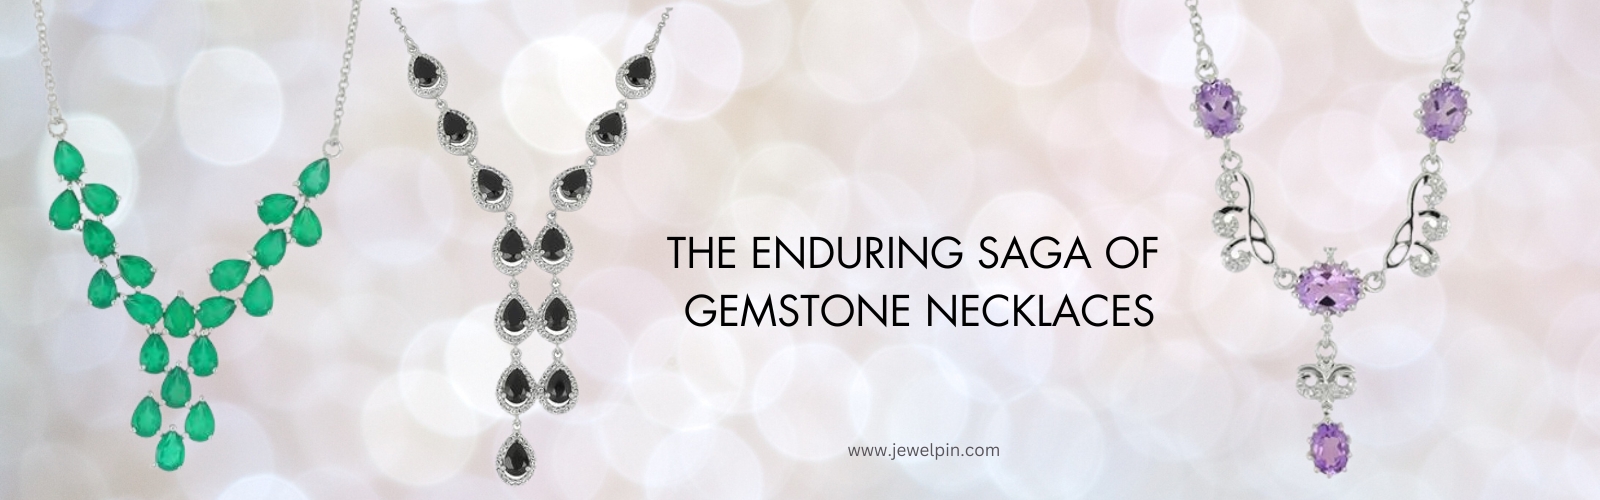 Elemental Elegance to Timeless Treasures The Enduring Saga of Gemstone Necklaces from Jewelpin